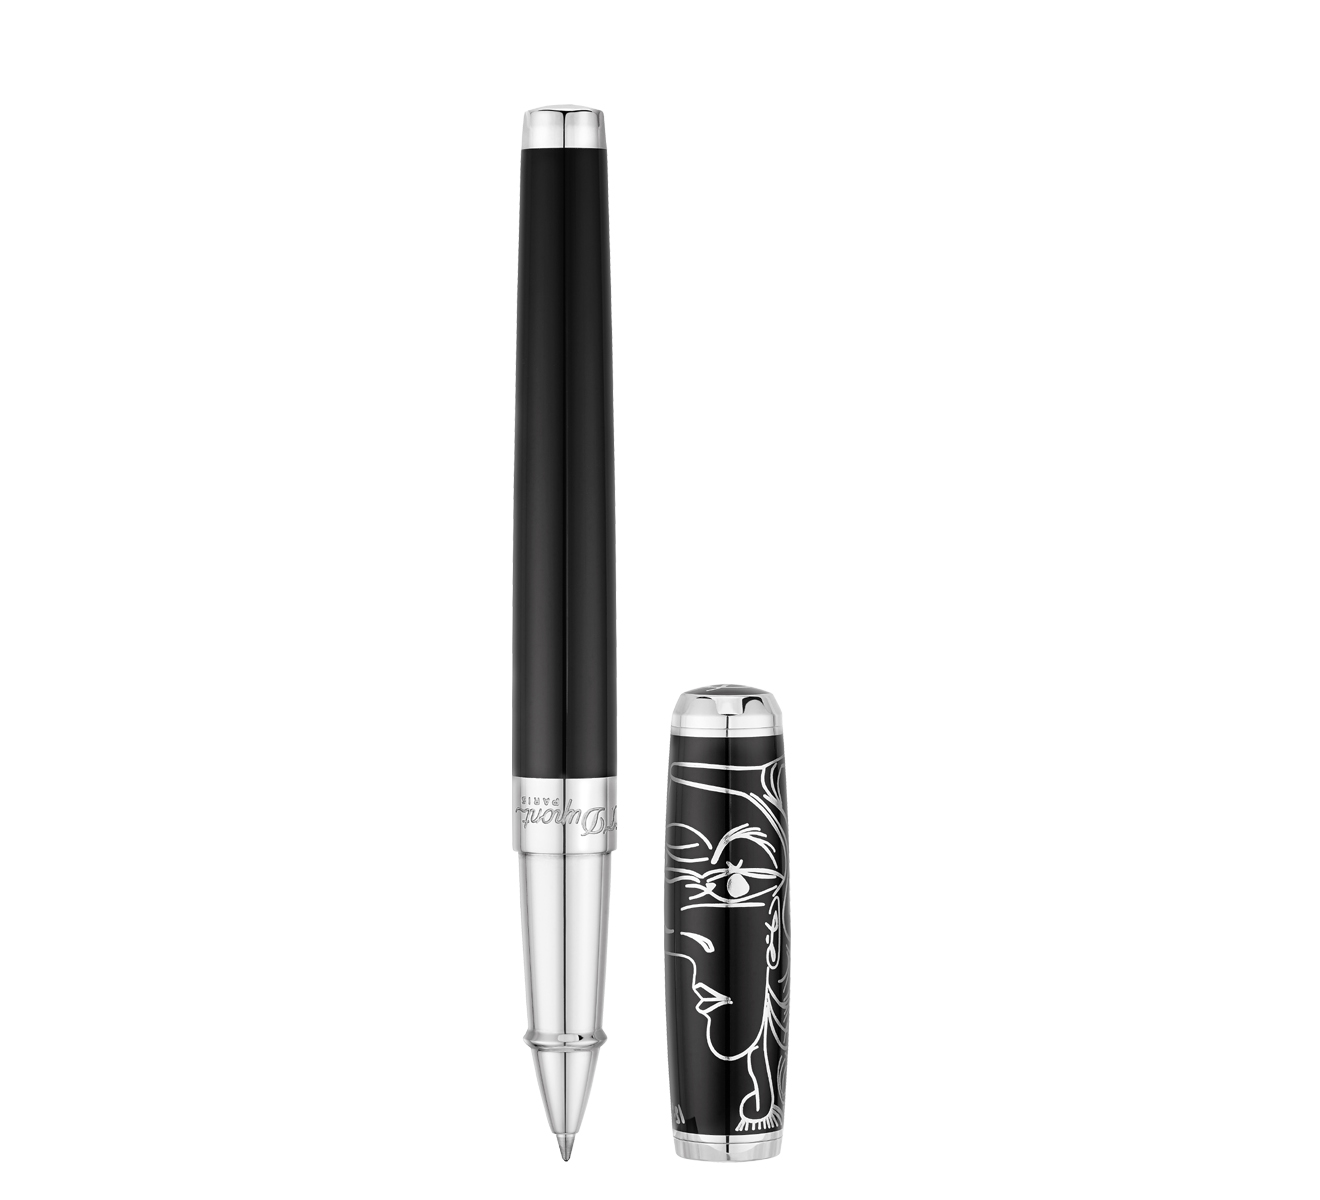 Перьевая ручка Picasso S.T. Dupont Limited Edition 410046 - фото 2 – Mercury